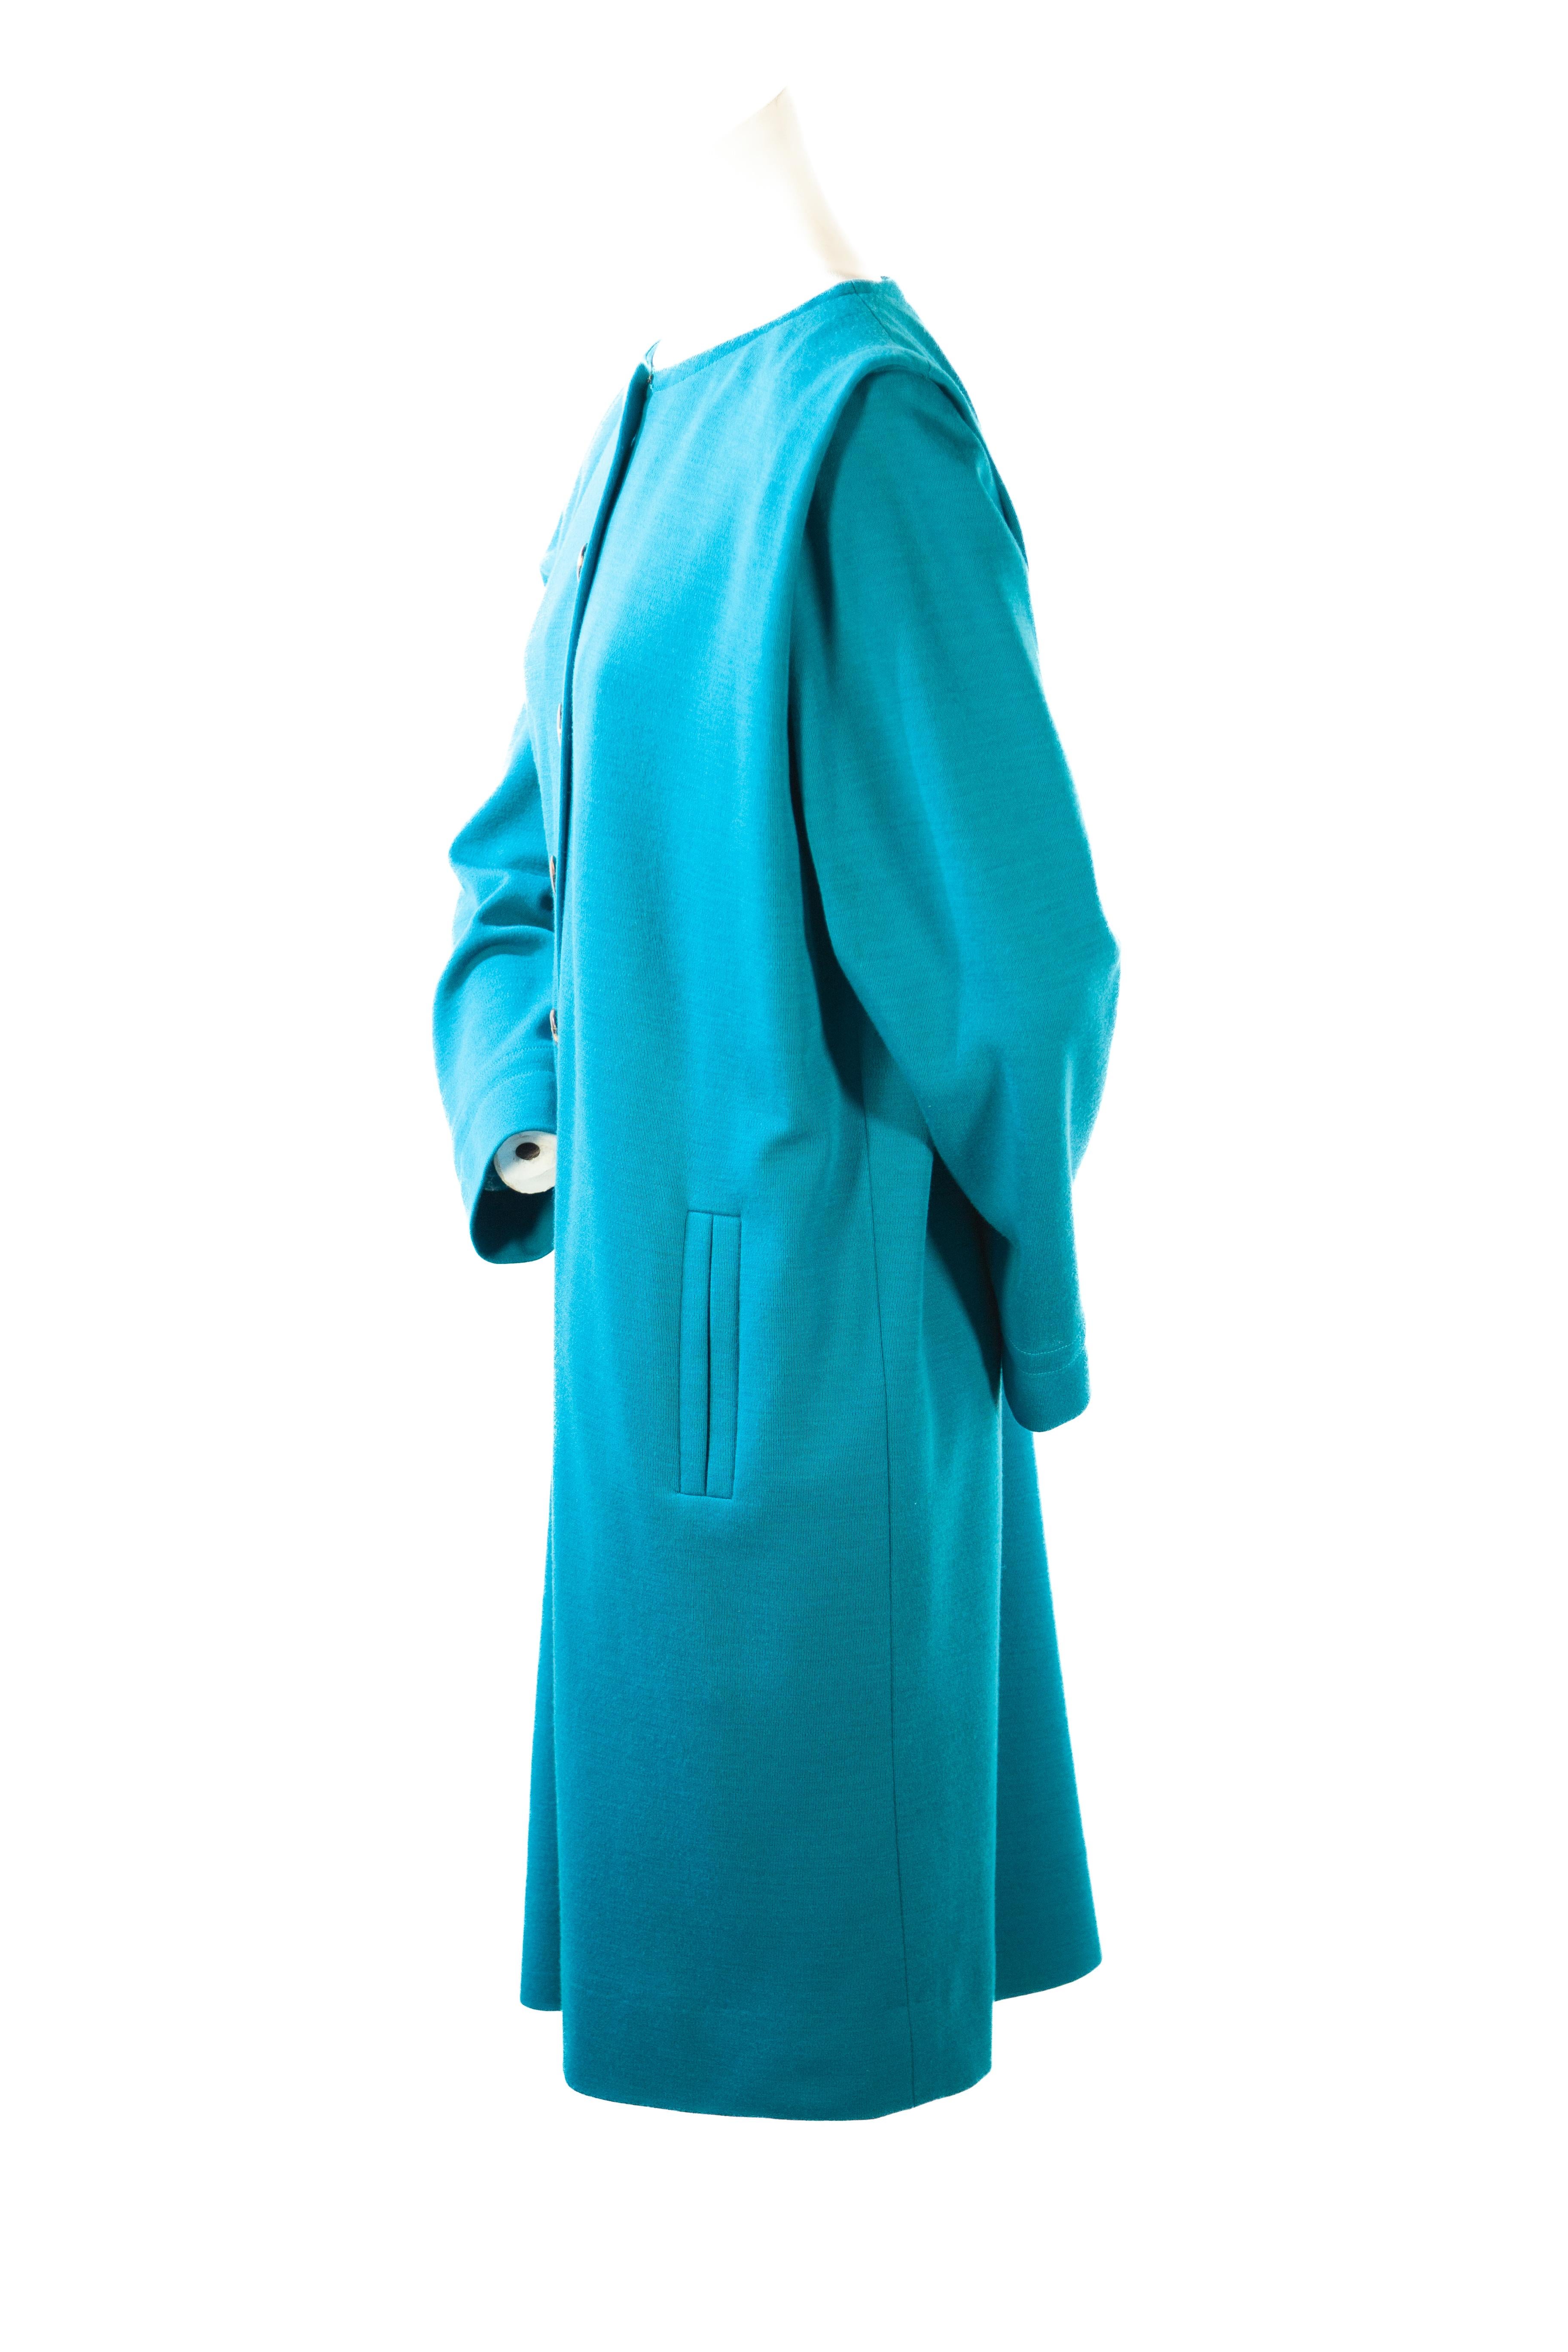 Yves Saint Laurent turquoise long sleeve button up dress

EU 42